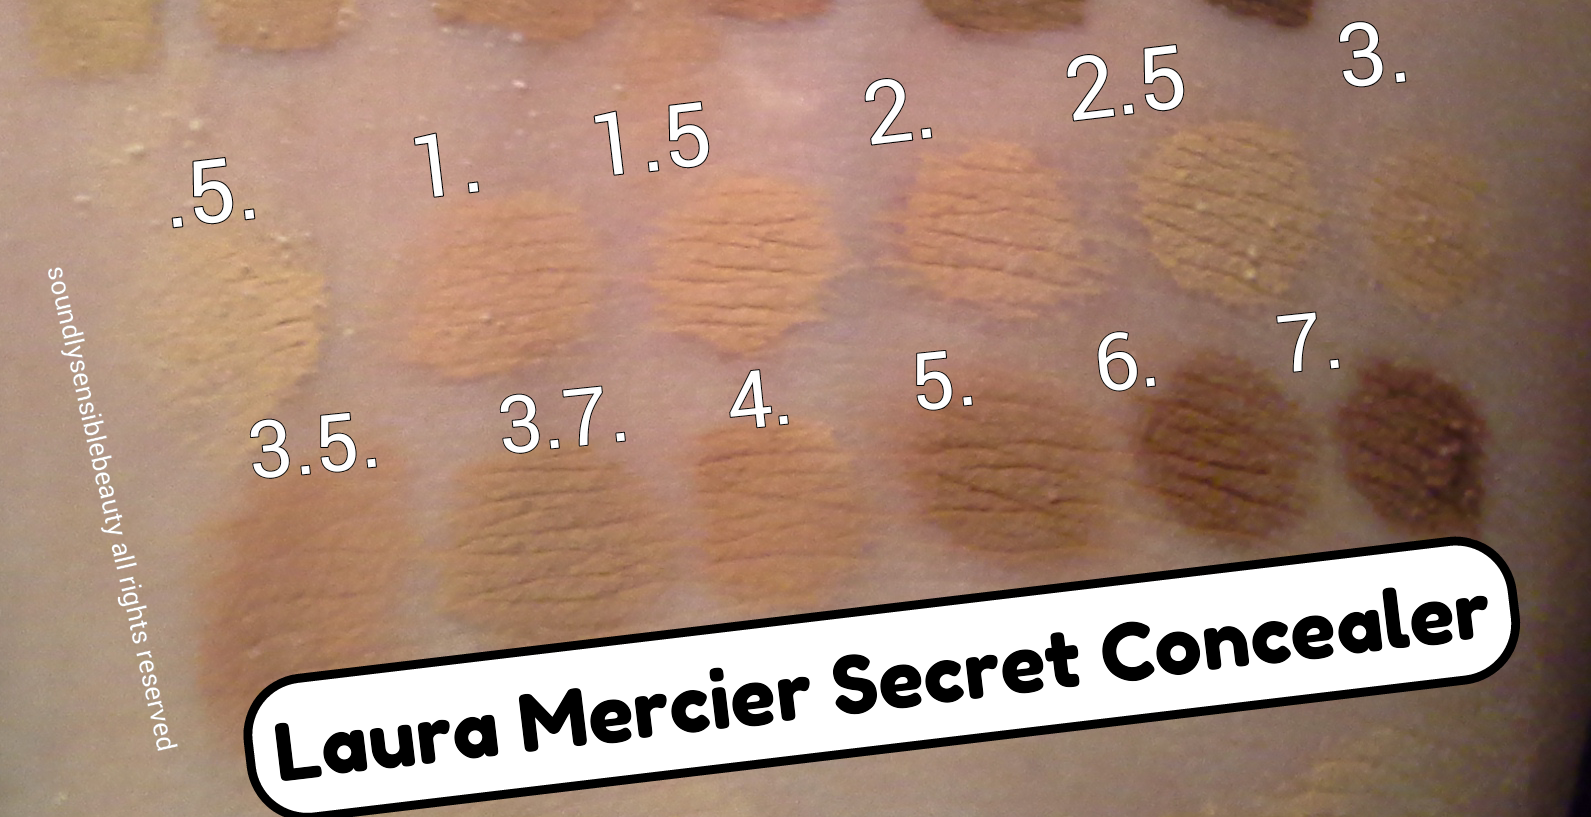 Laura Mercier Secret Concealer Review & Swatches of Shades